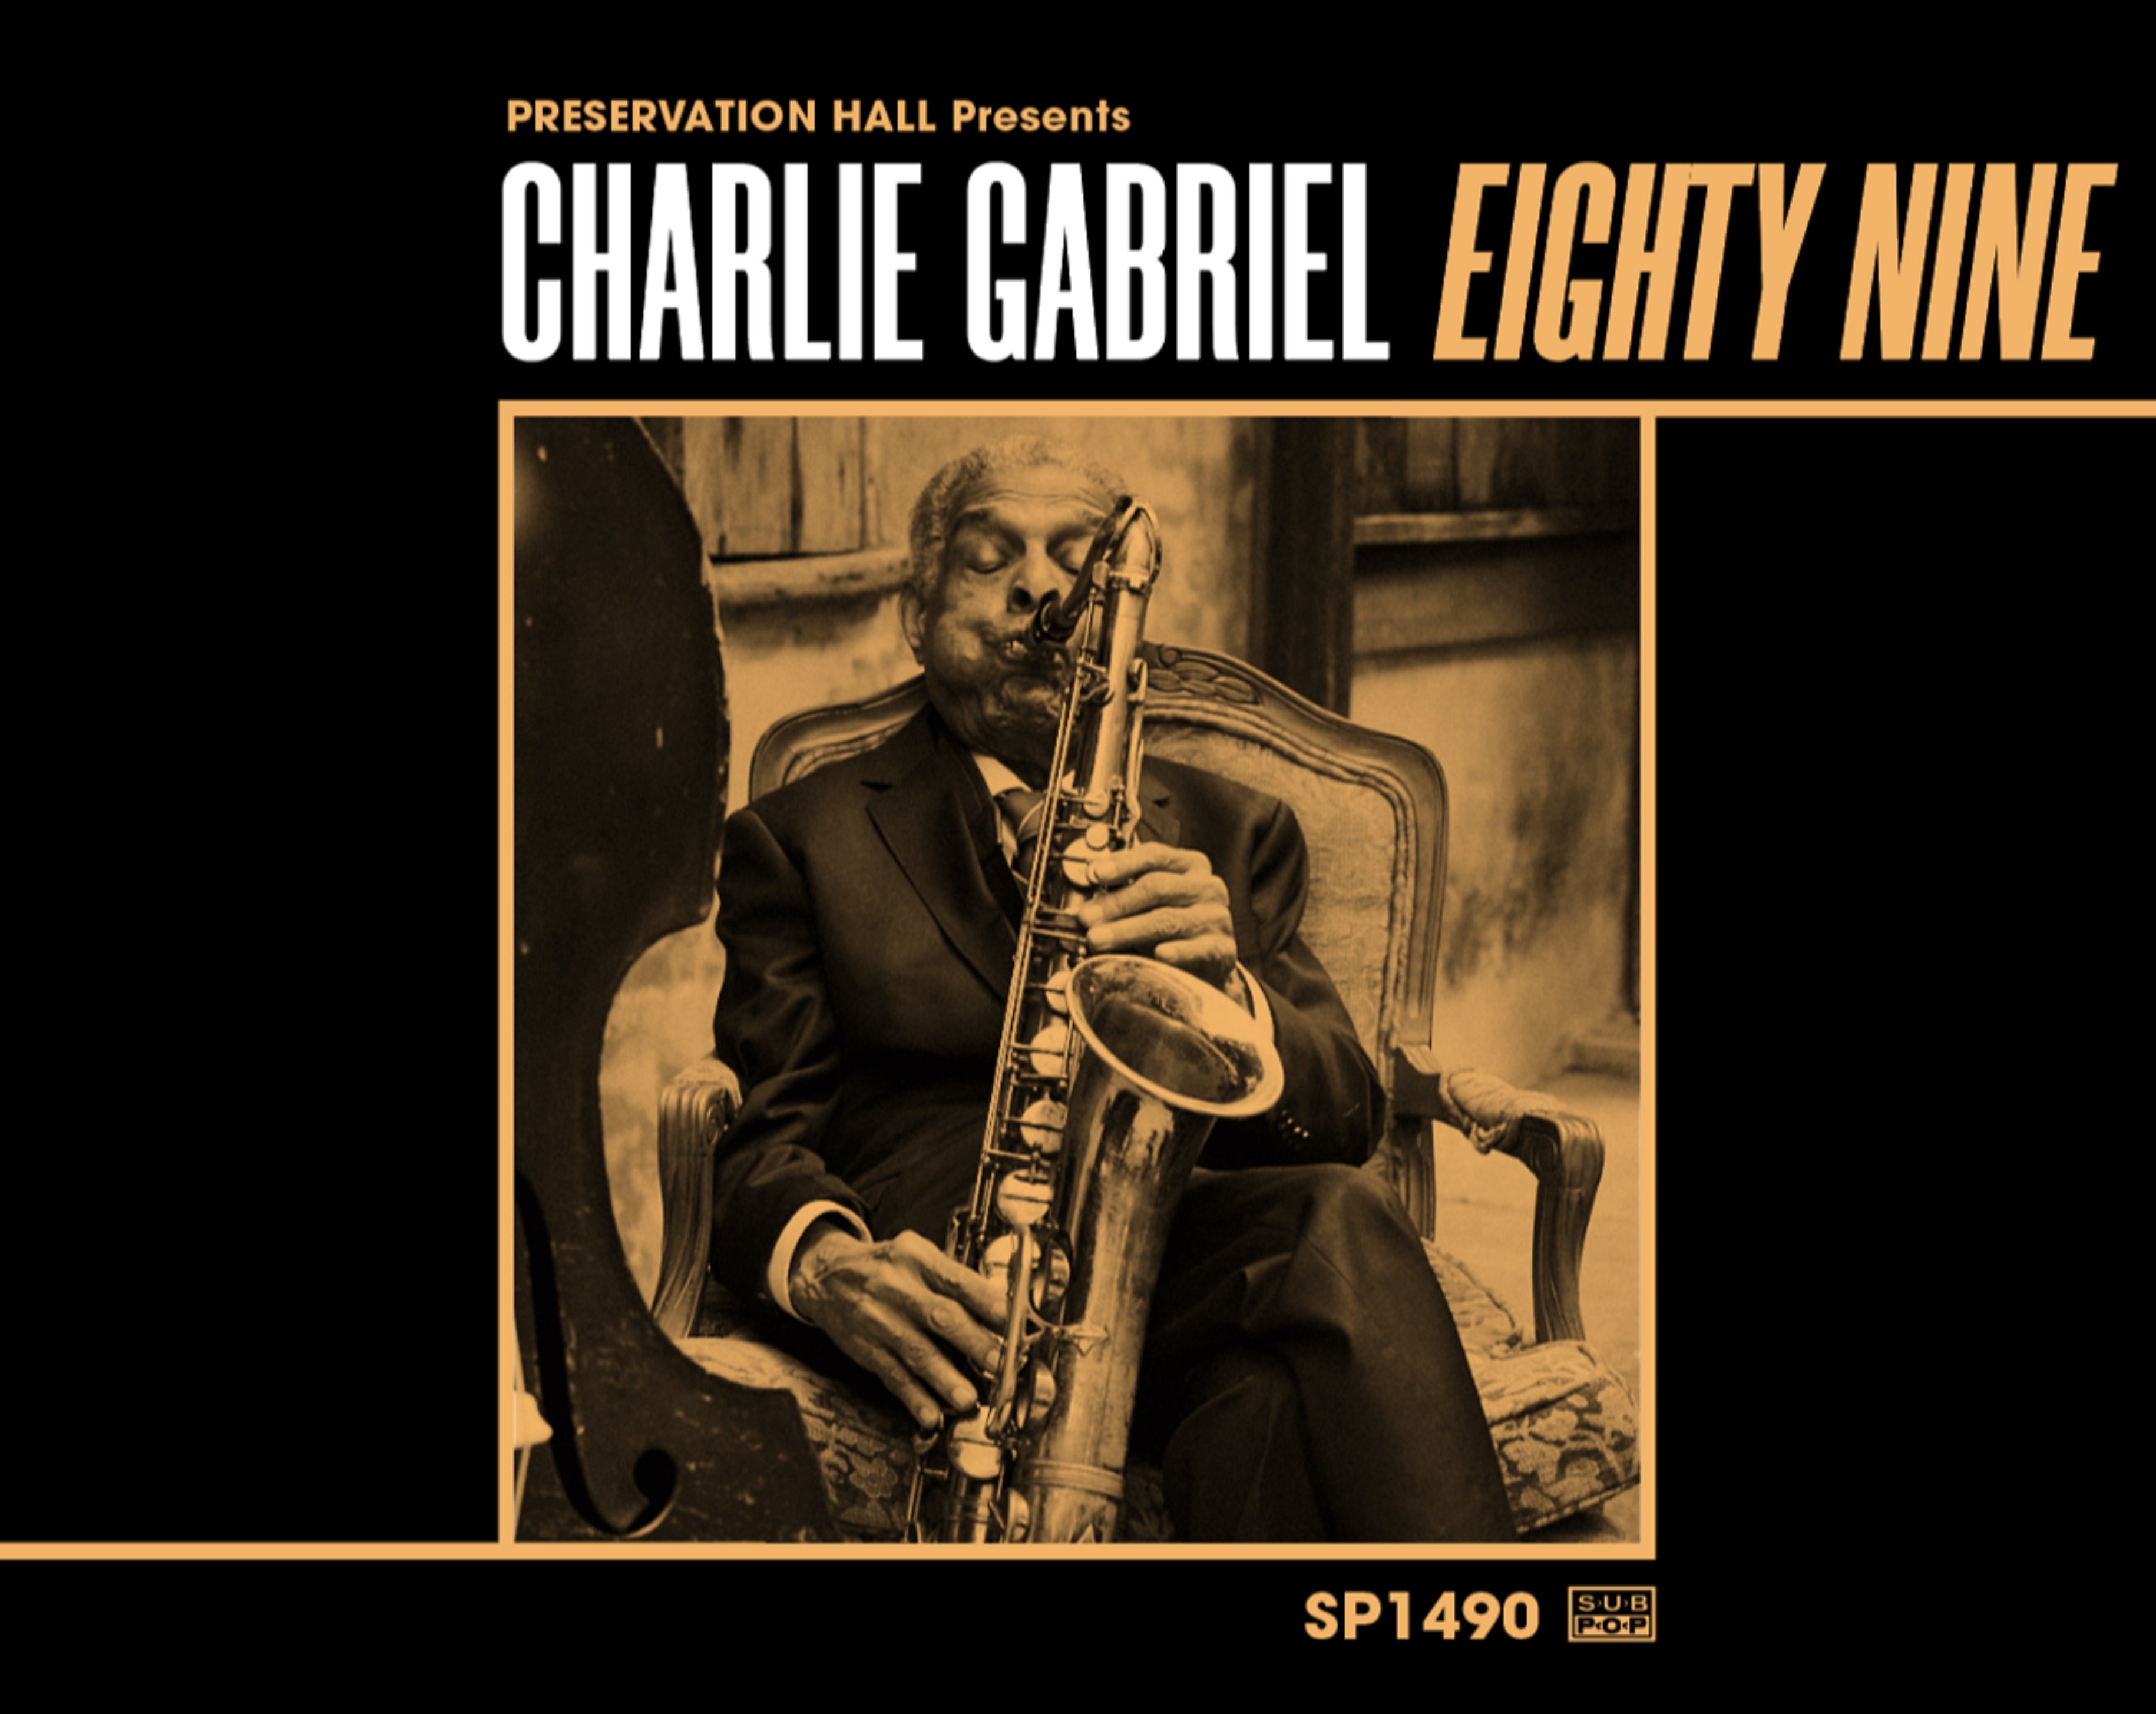 Introducing 89: Charlie Gabriel's Debut Album